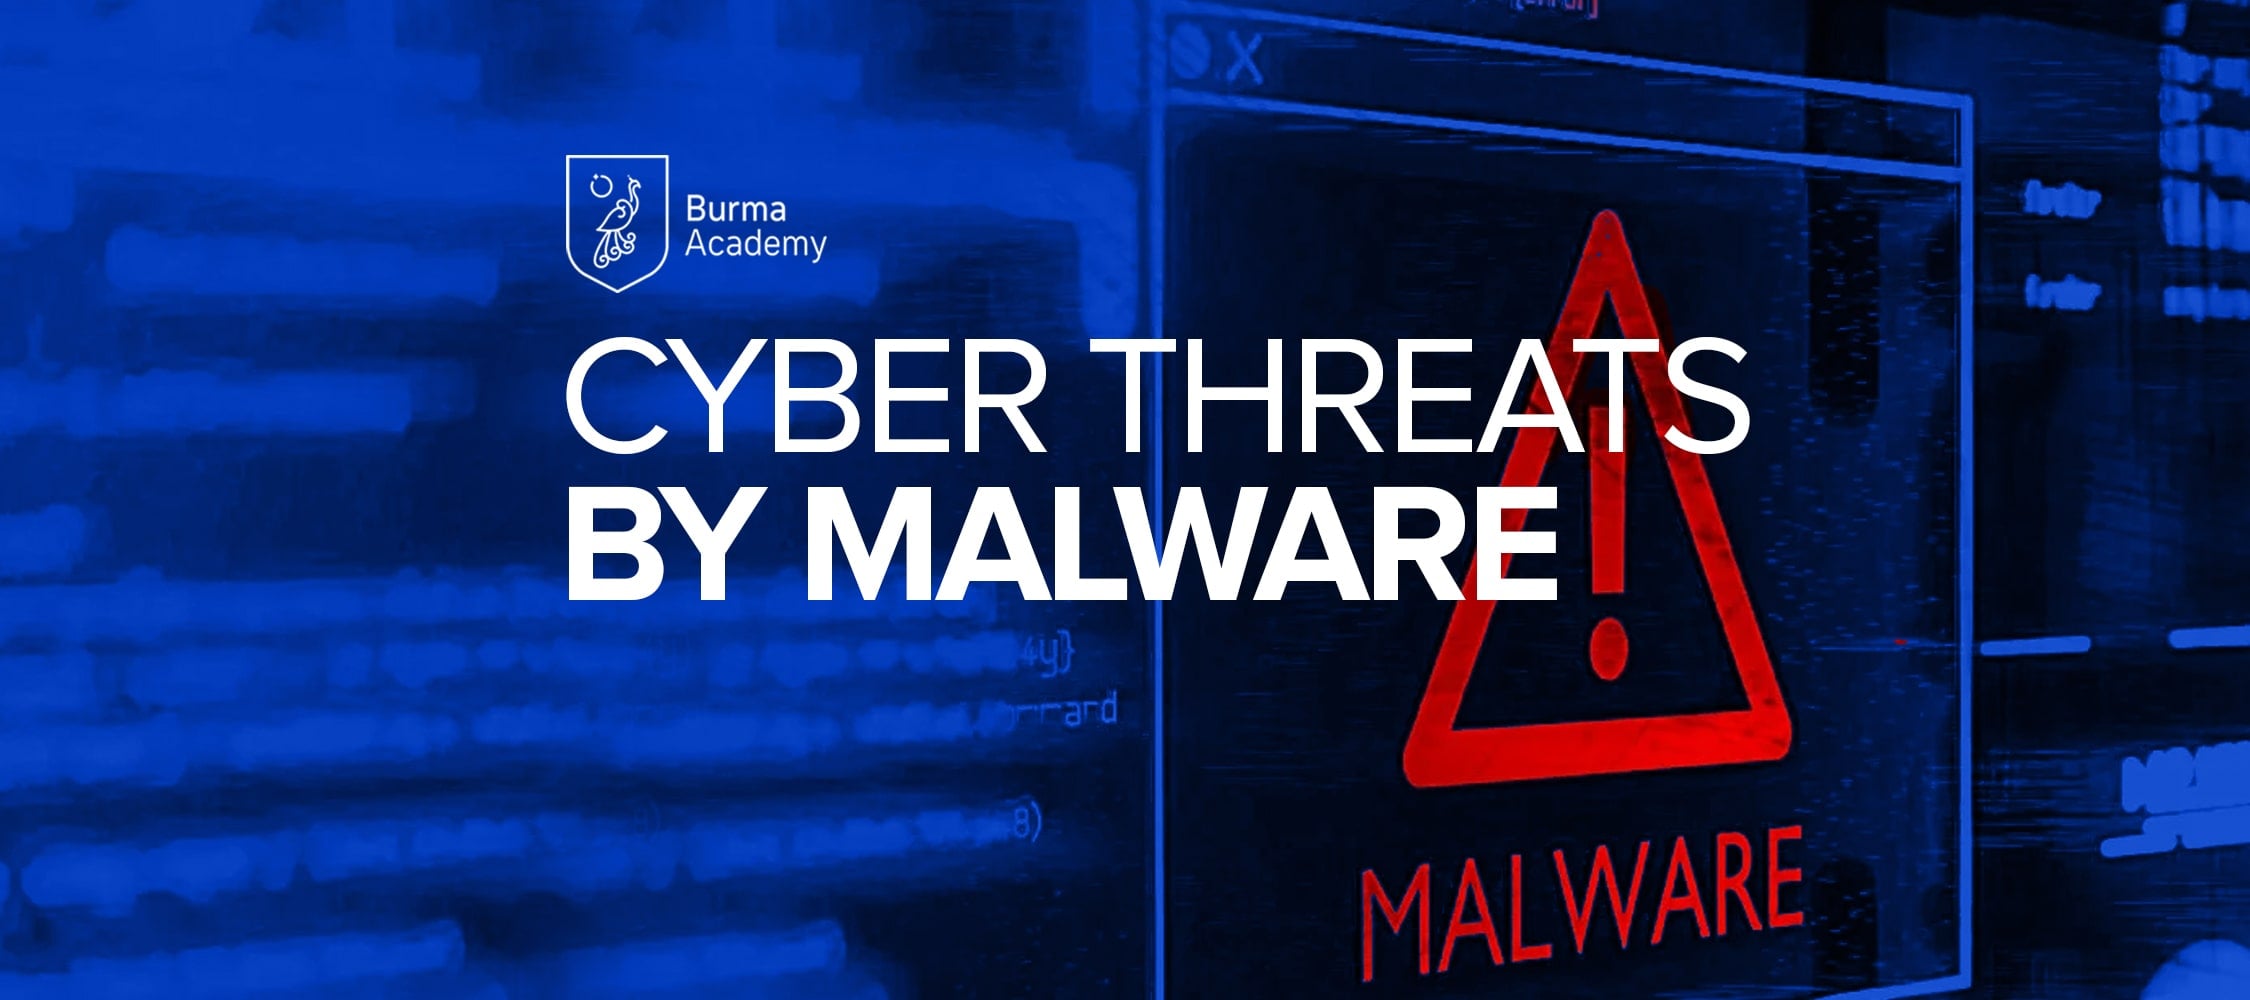 Cyberthreats by Malware HPI003